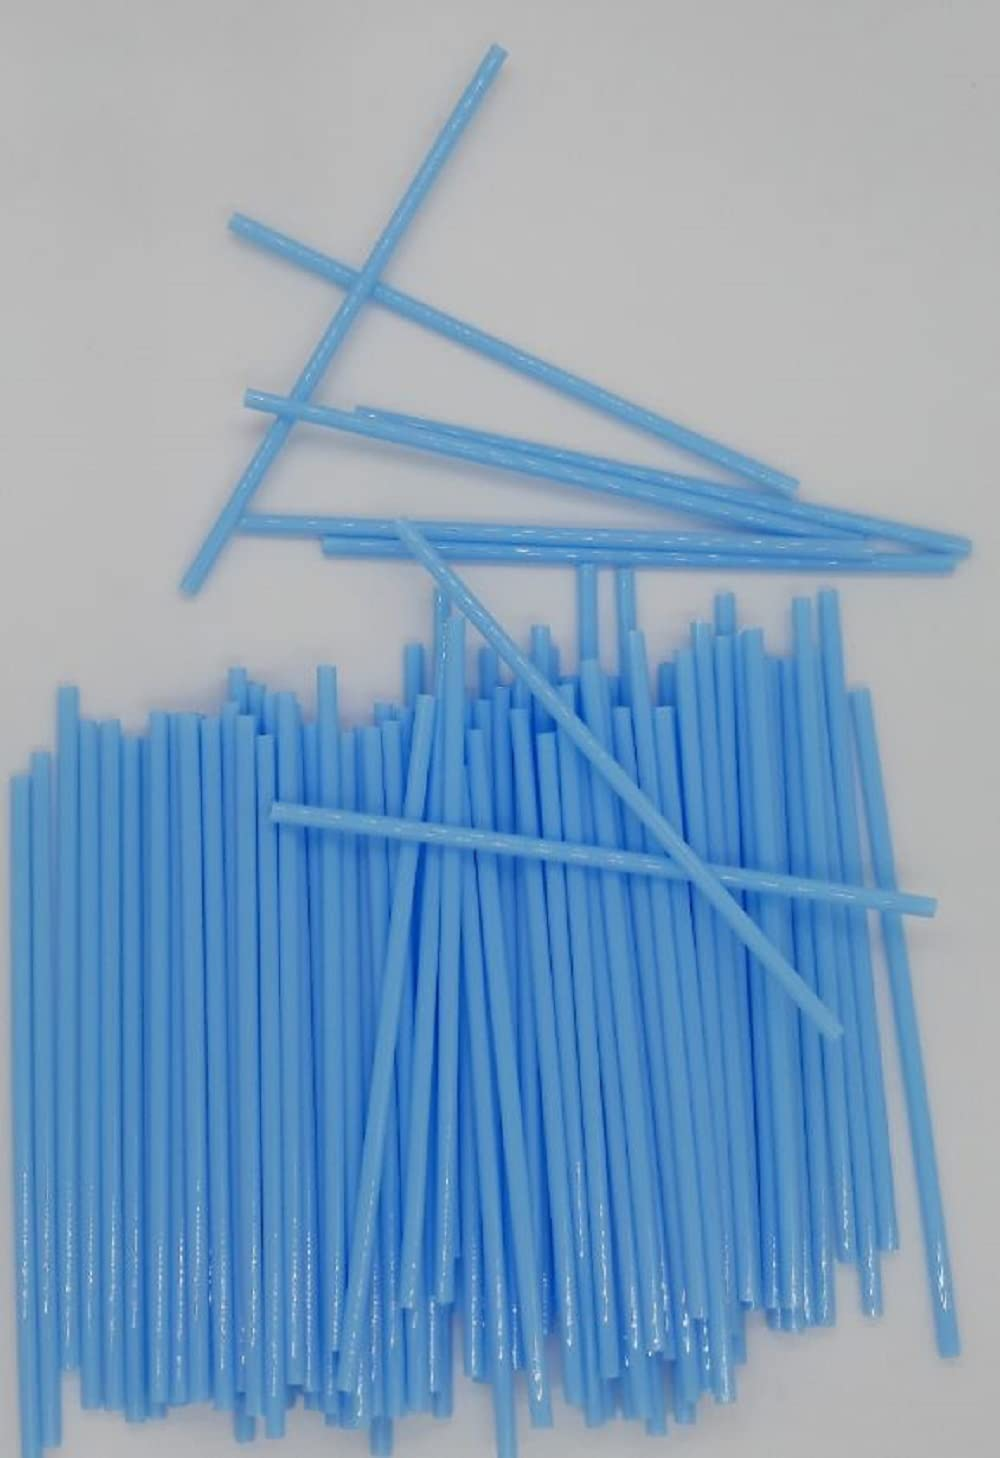 Wow Plastic Disposable Plastic Drinking Straws - 250 Count (Neon) (Neon)